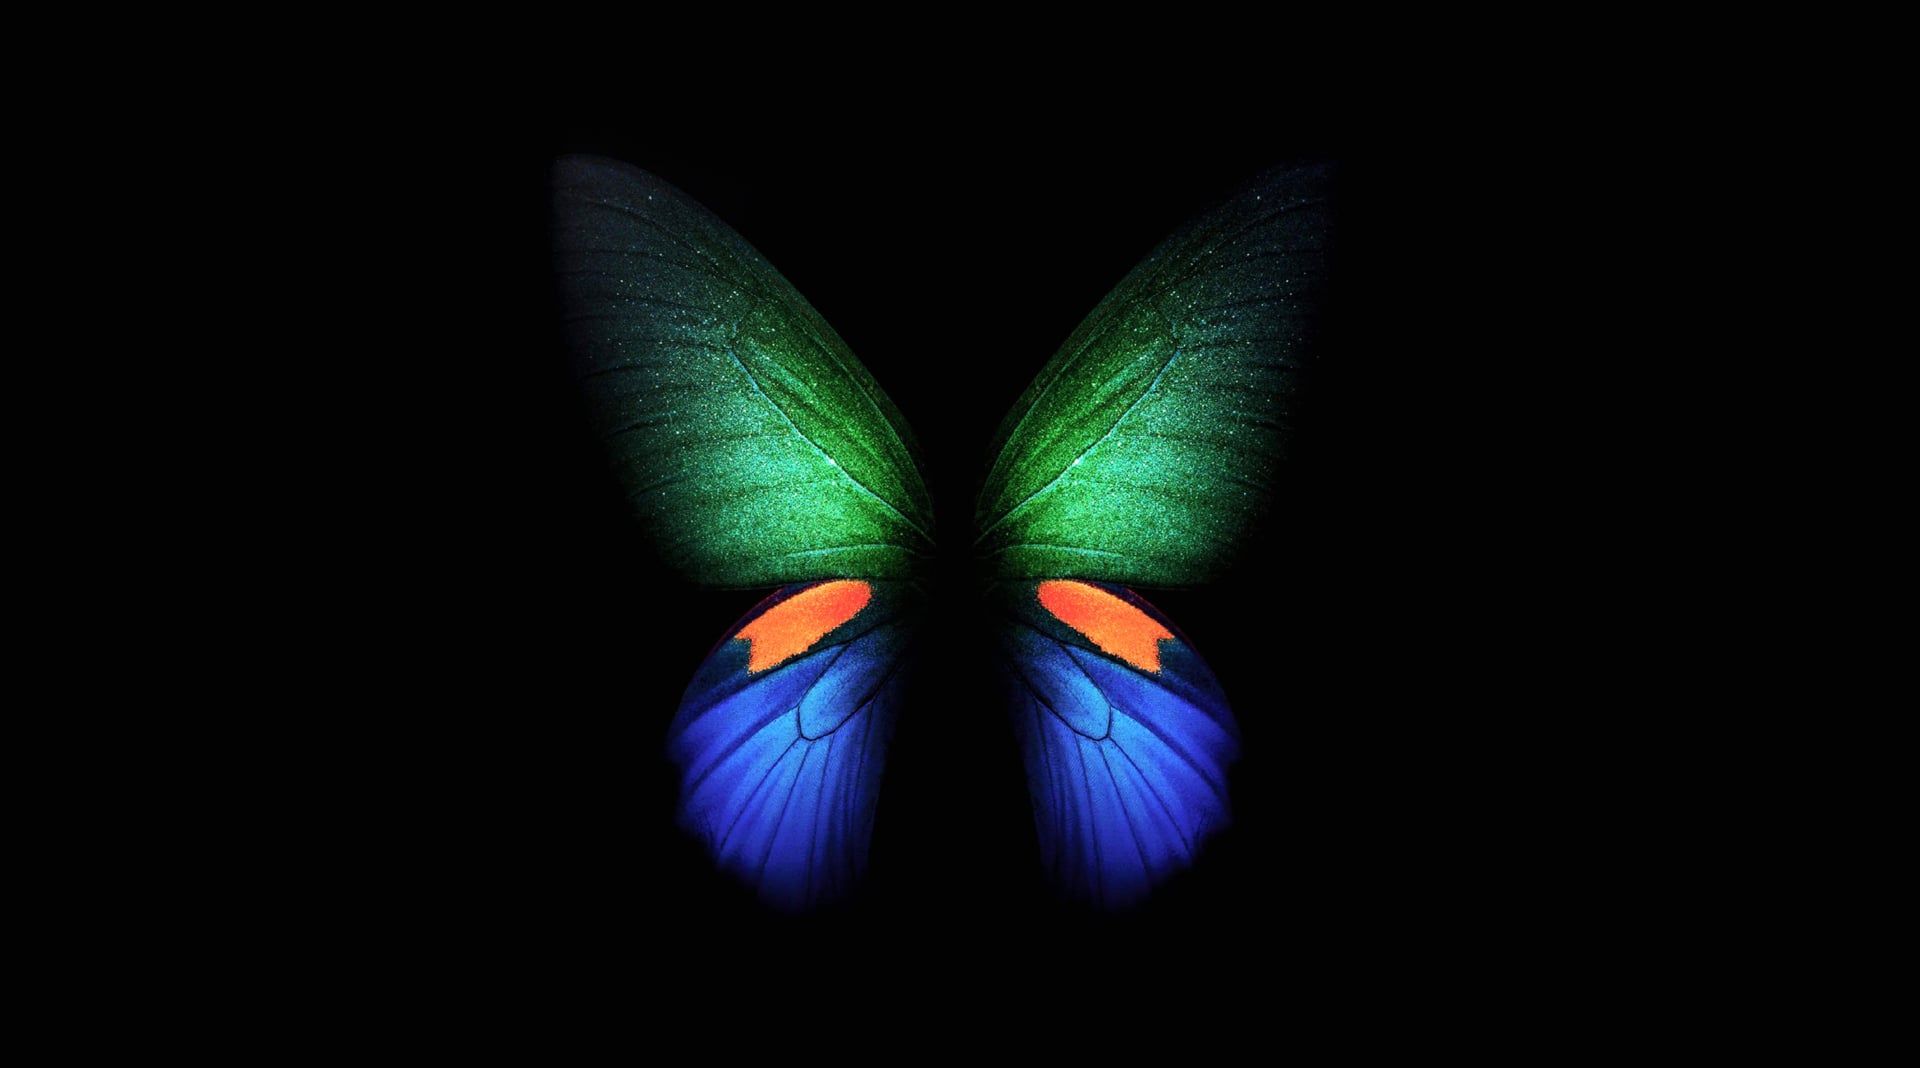 Digital Art Butterfly wallpapers HD quality